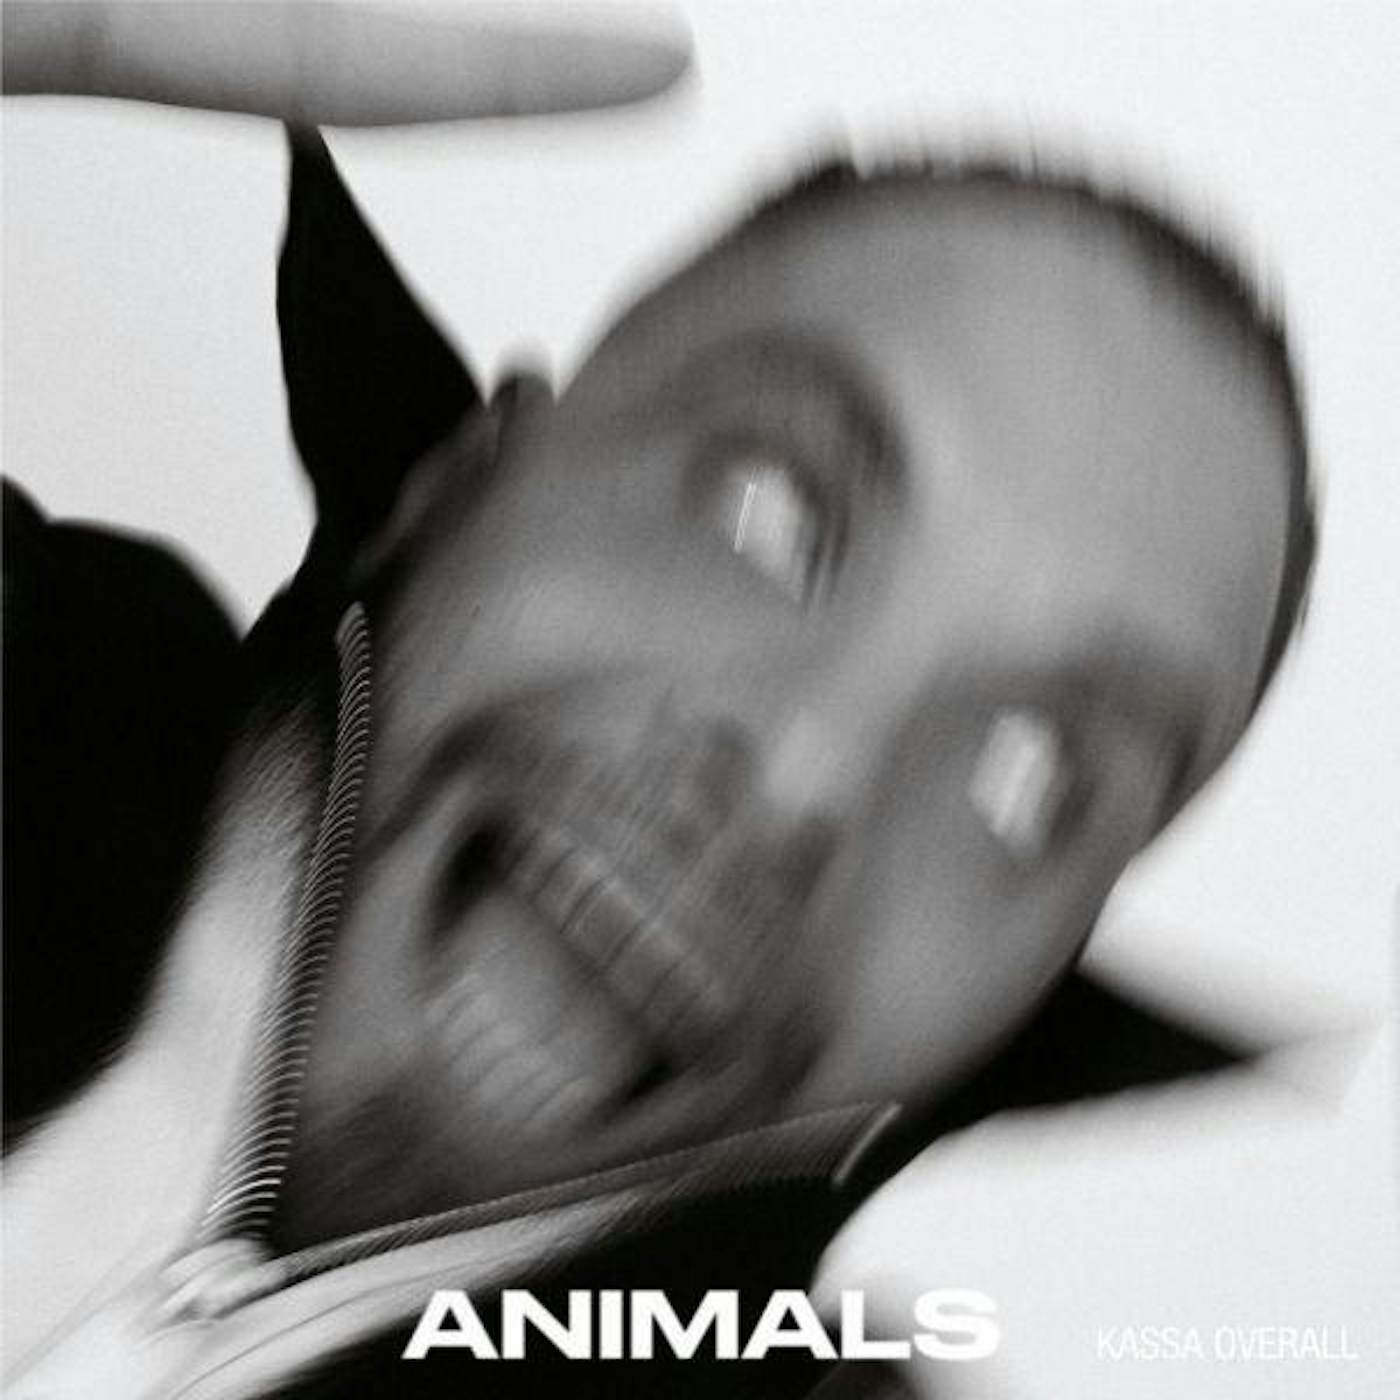 Kassa Overall Animals CD